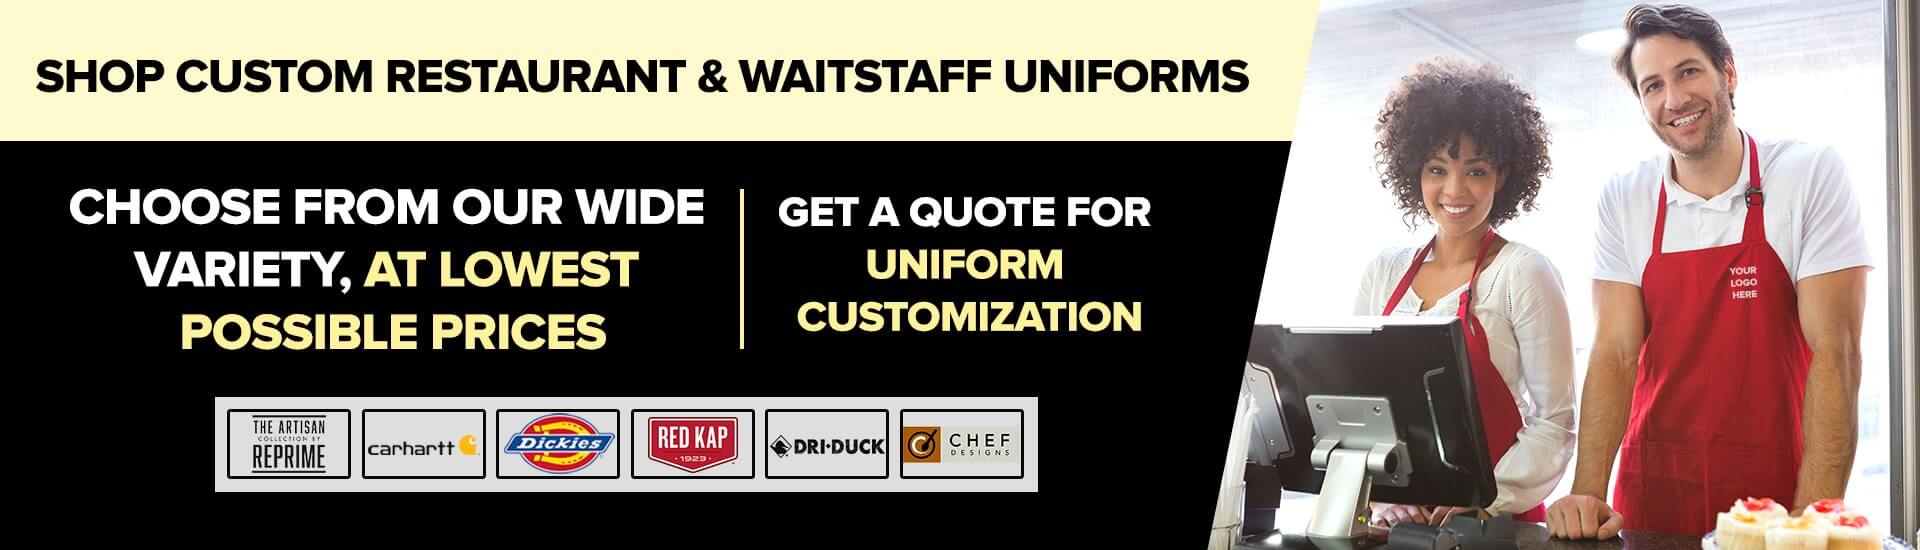 Buy Custom Restaurant and Wait Staff Uniform